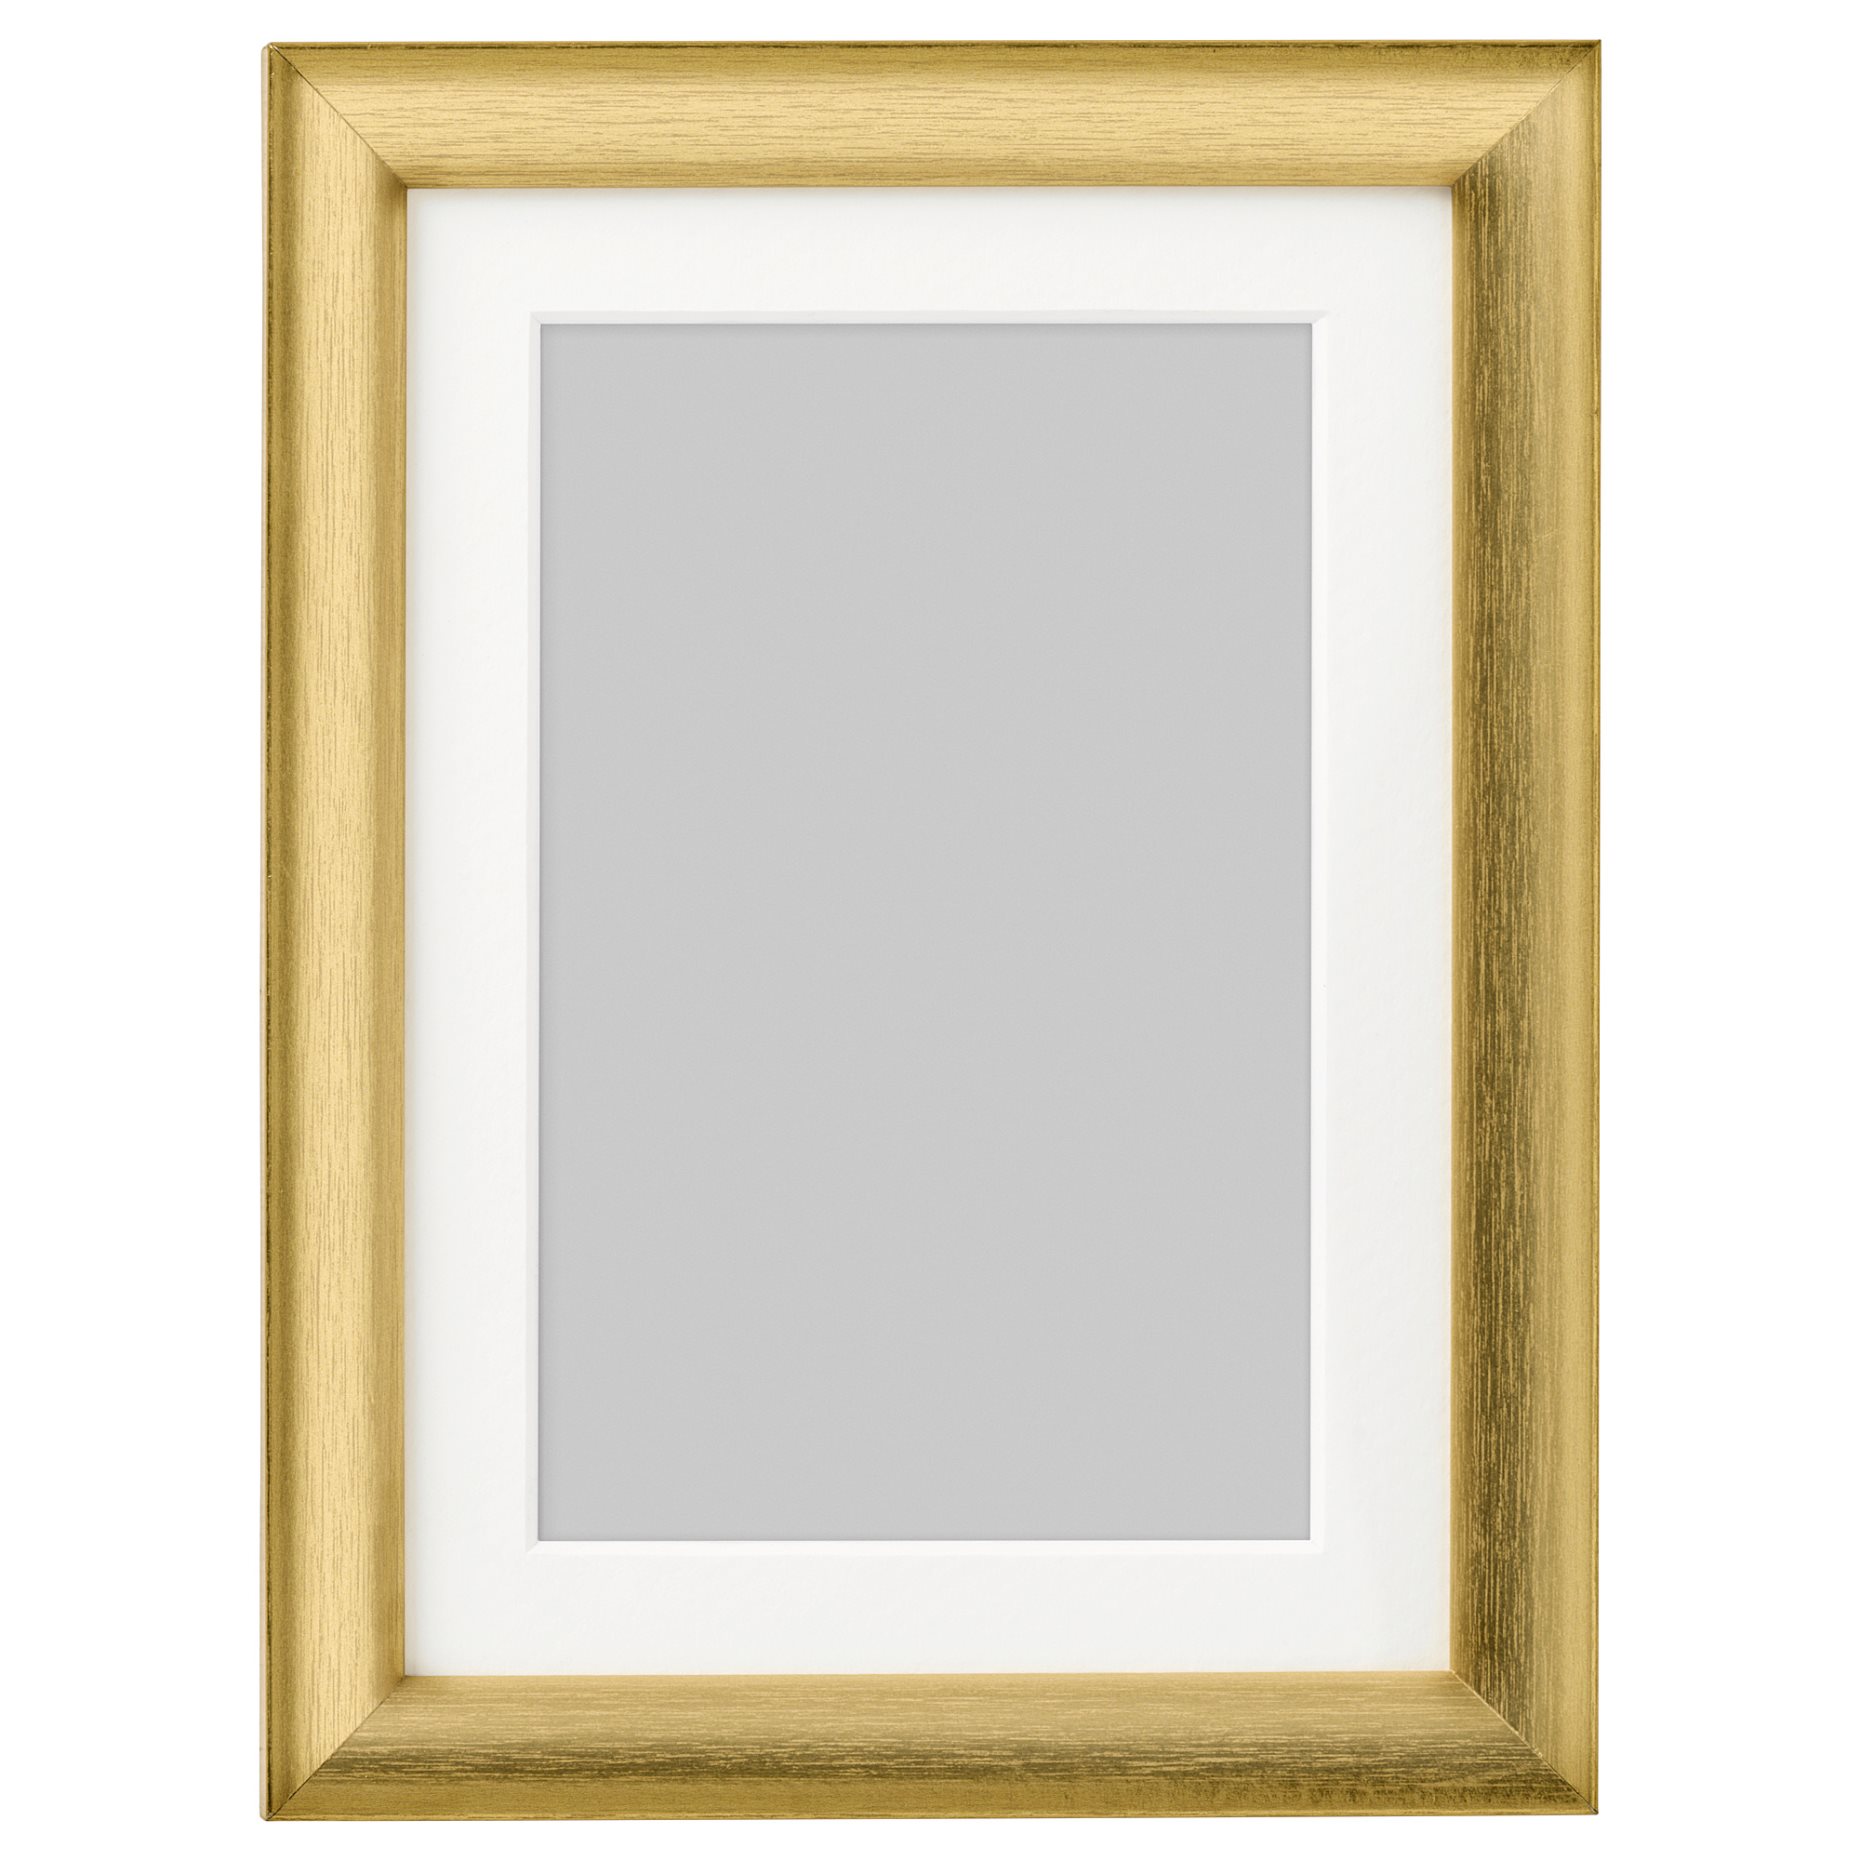 SILVERHÖJDEN, frame, 13x18 cm, 403.704.00